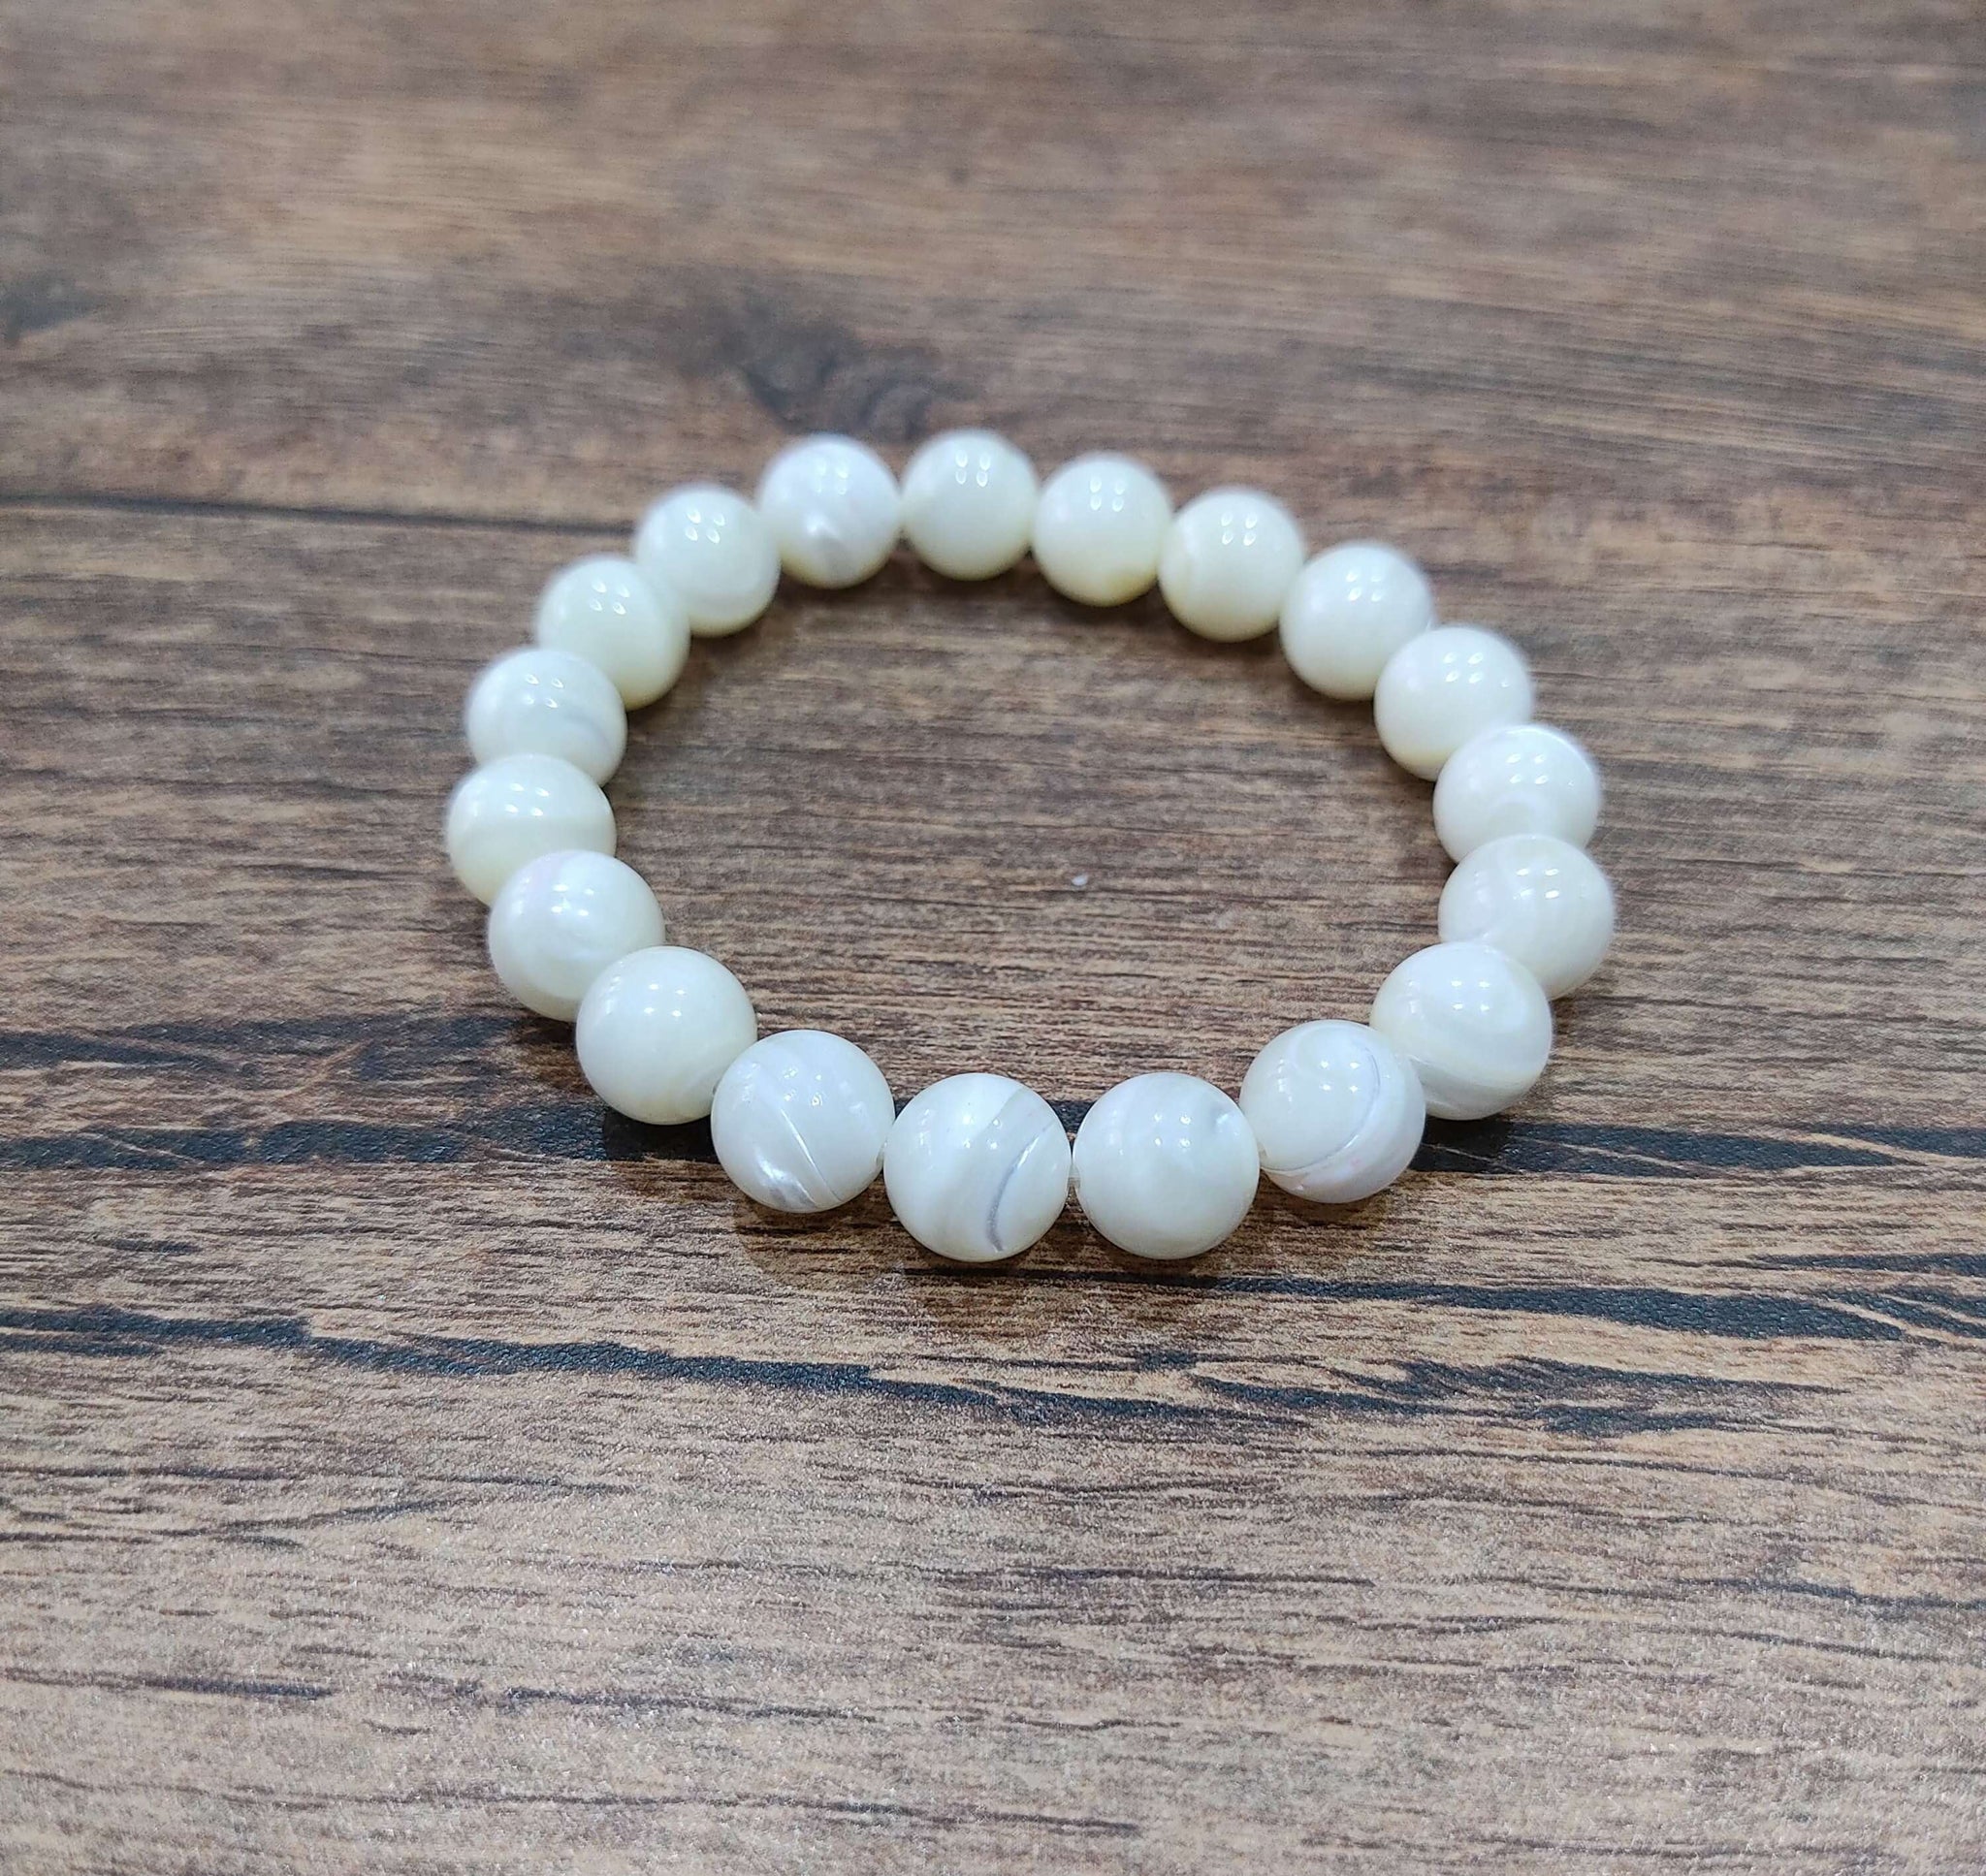 Buy JEWEL FUEL White Pearl Bracelet For Women at Amazon.in